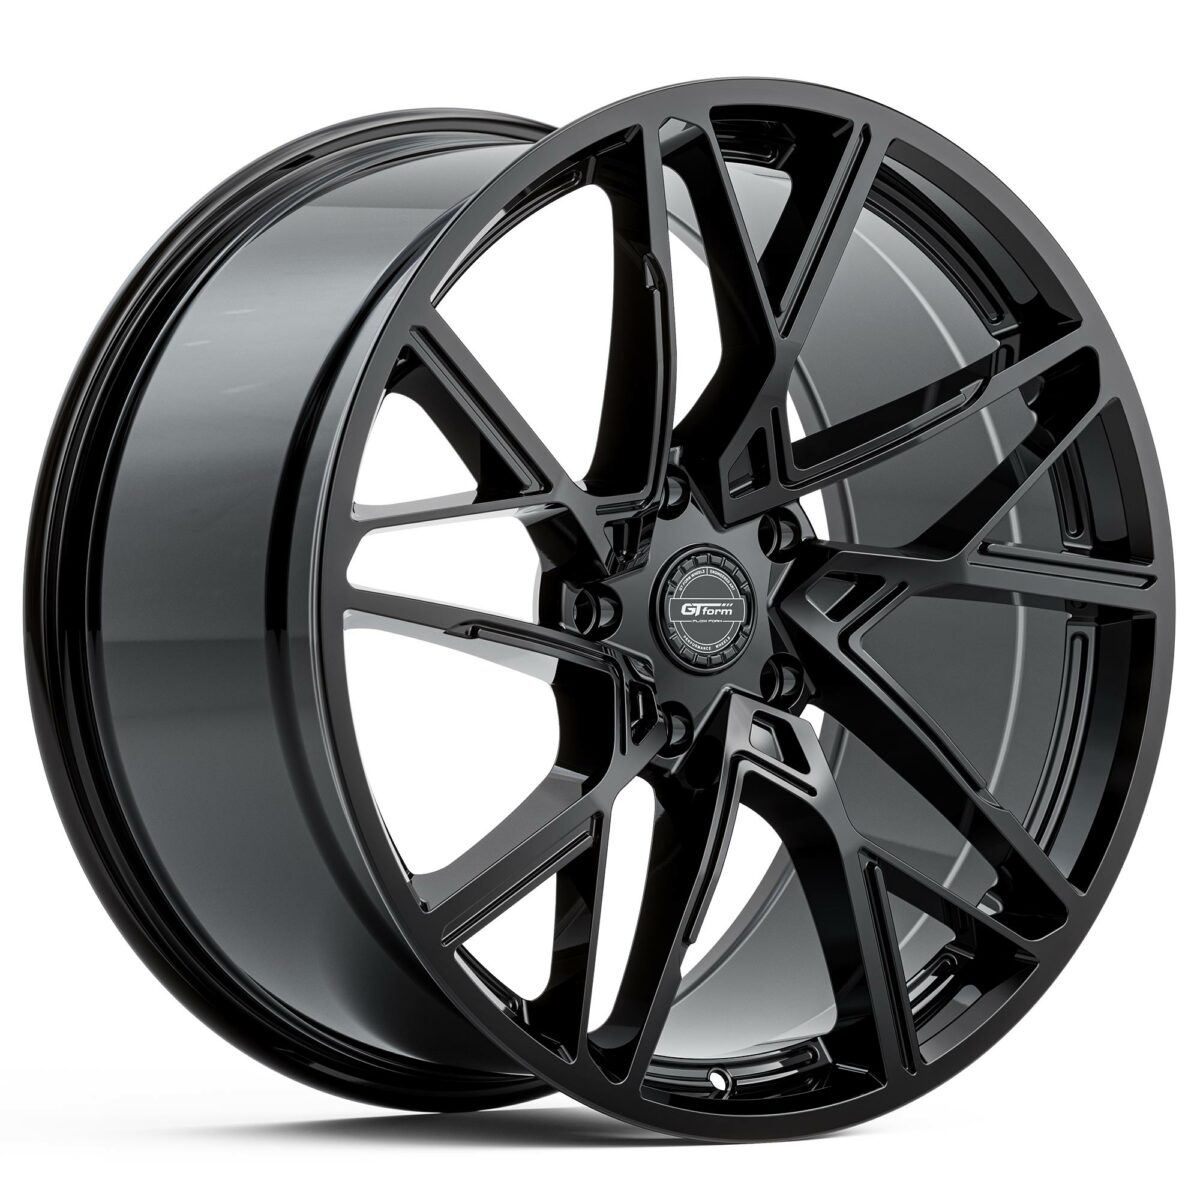 GT Form Interflow Gloss Black Rims 19 20 inch Performance Wheels